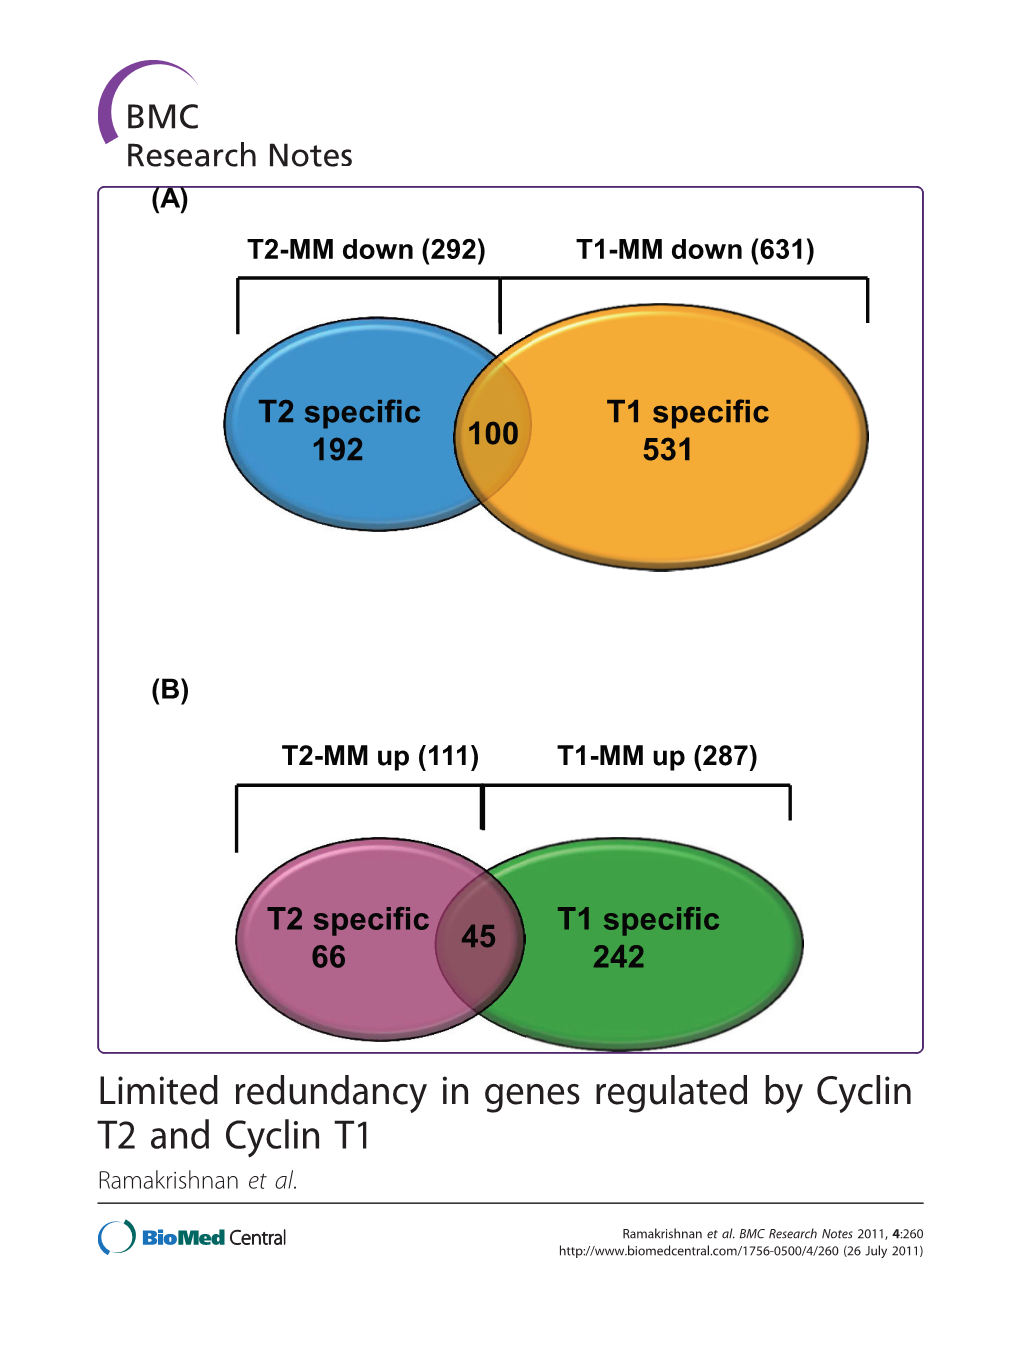 Limited Redundancy in Genes Regulated by Cyclin T2 and Cyclin T1 Ramakrishnan Et Al